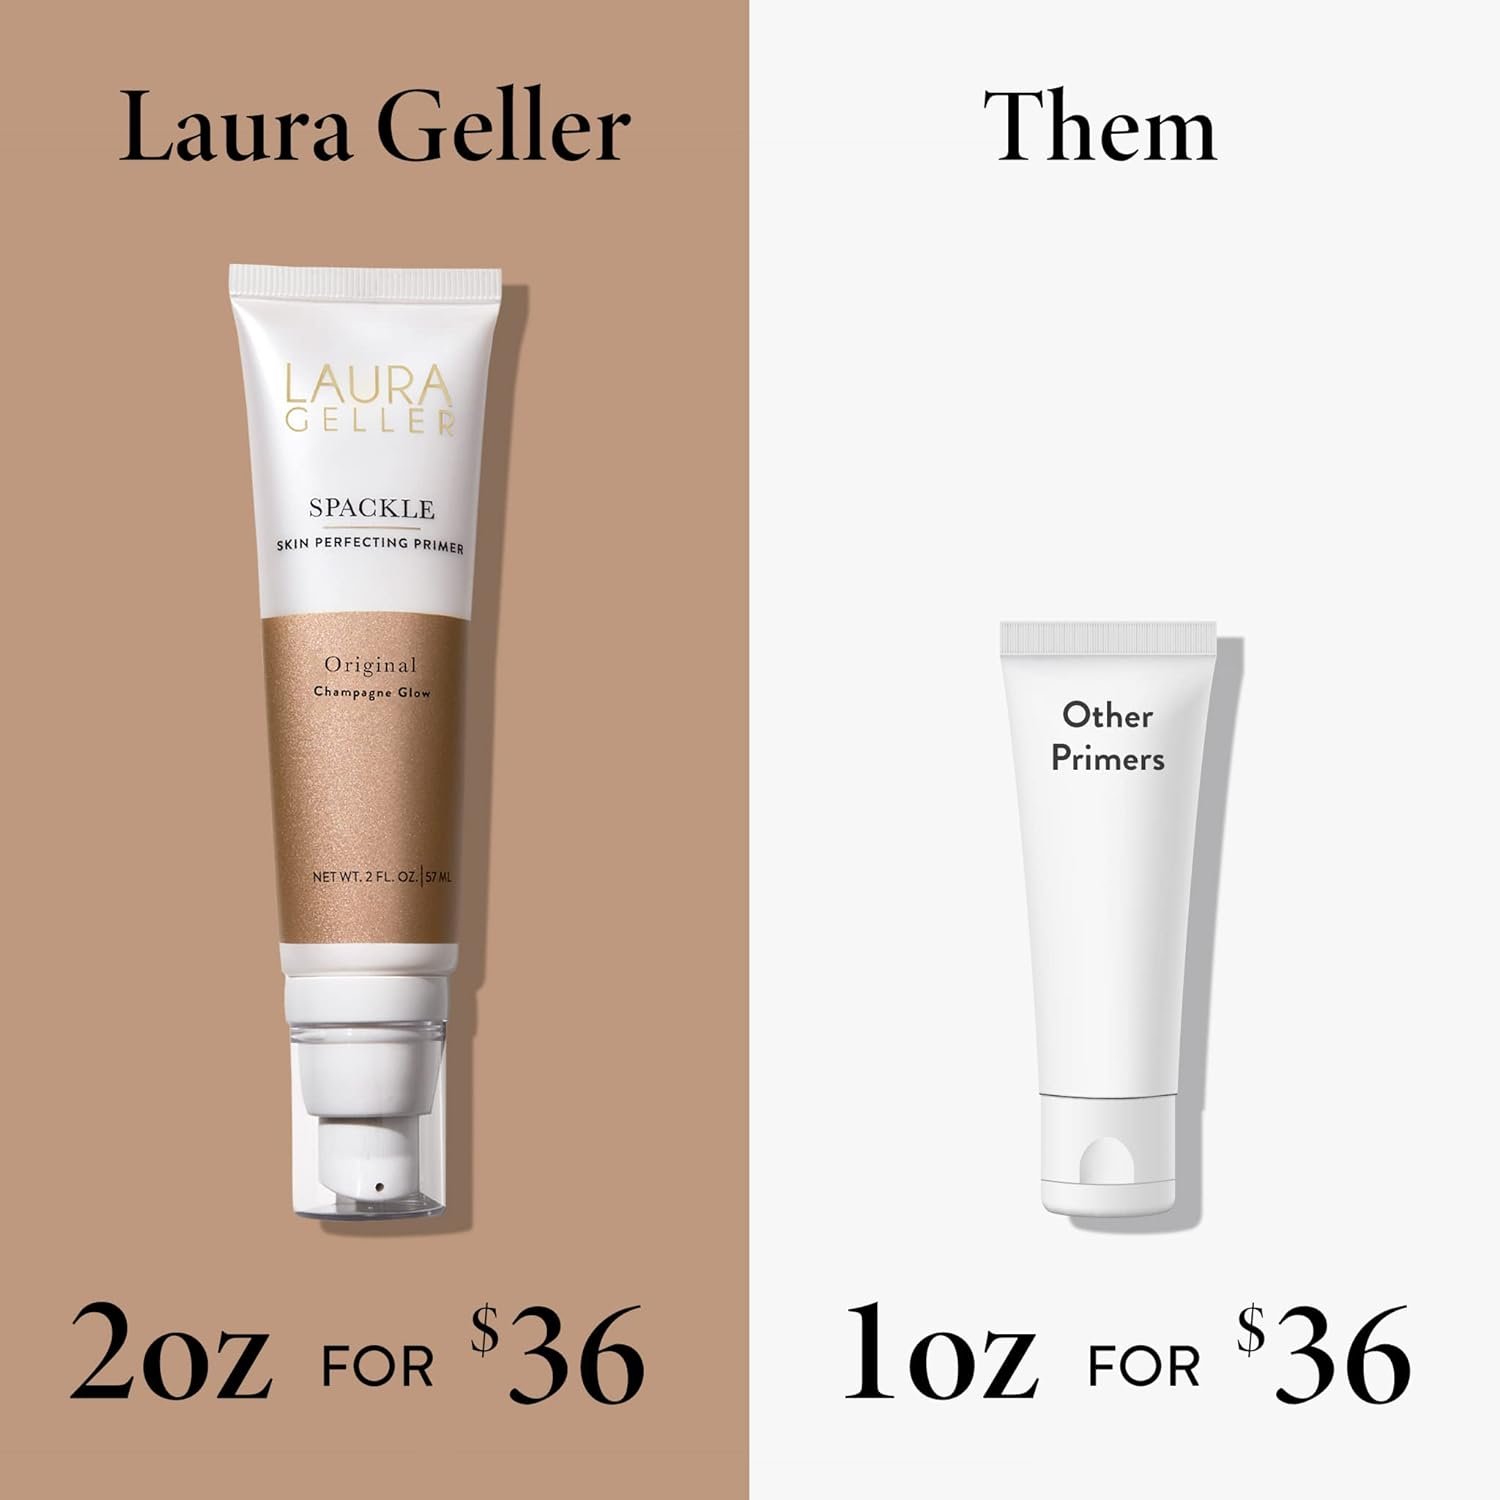 LAURA GELLER NEW YORK Spackle Super-Size - Champagne Glow - 2 Fl Oz - Skin Perfecting Primer Makeup with Hyaluronic Acid - Long-Wear Foundation Face Primer